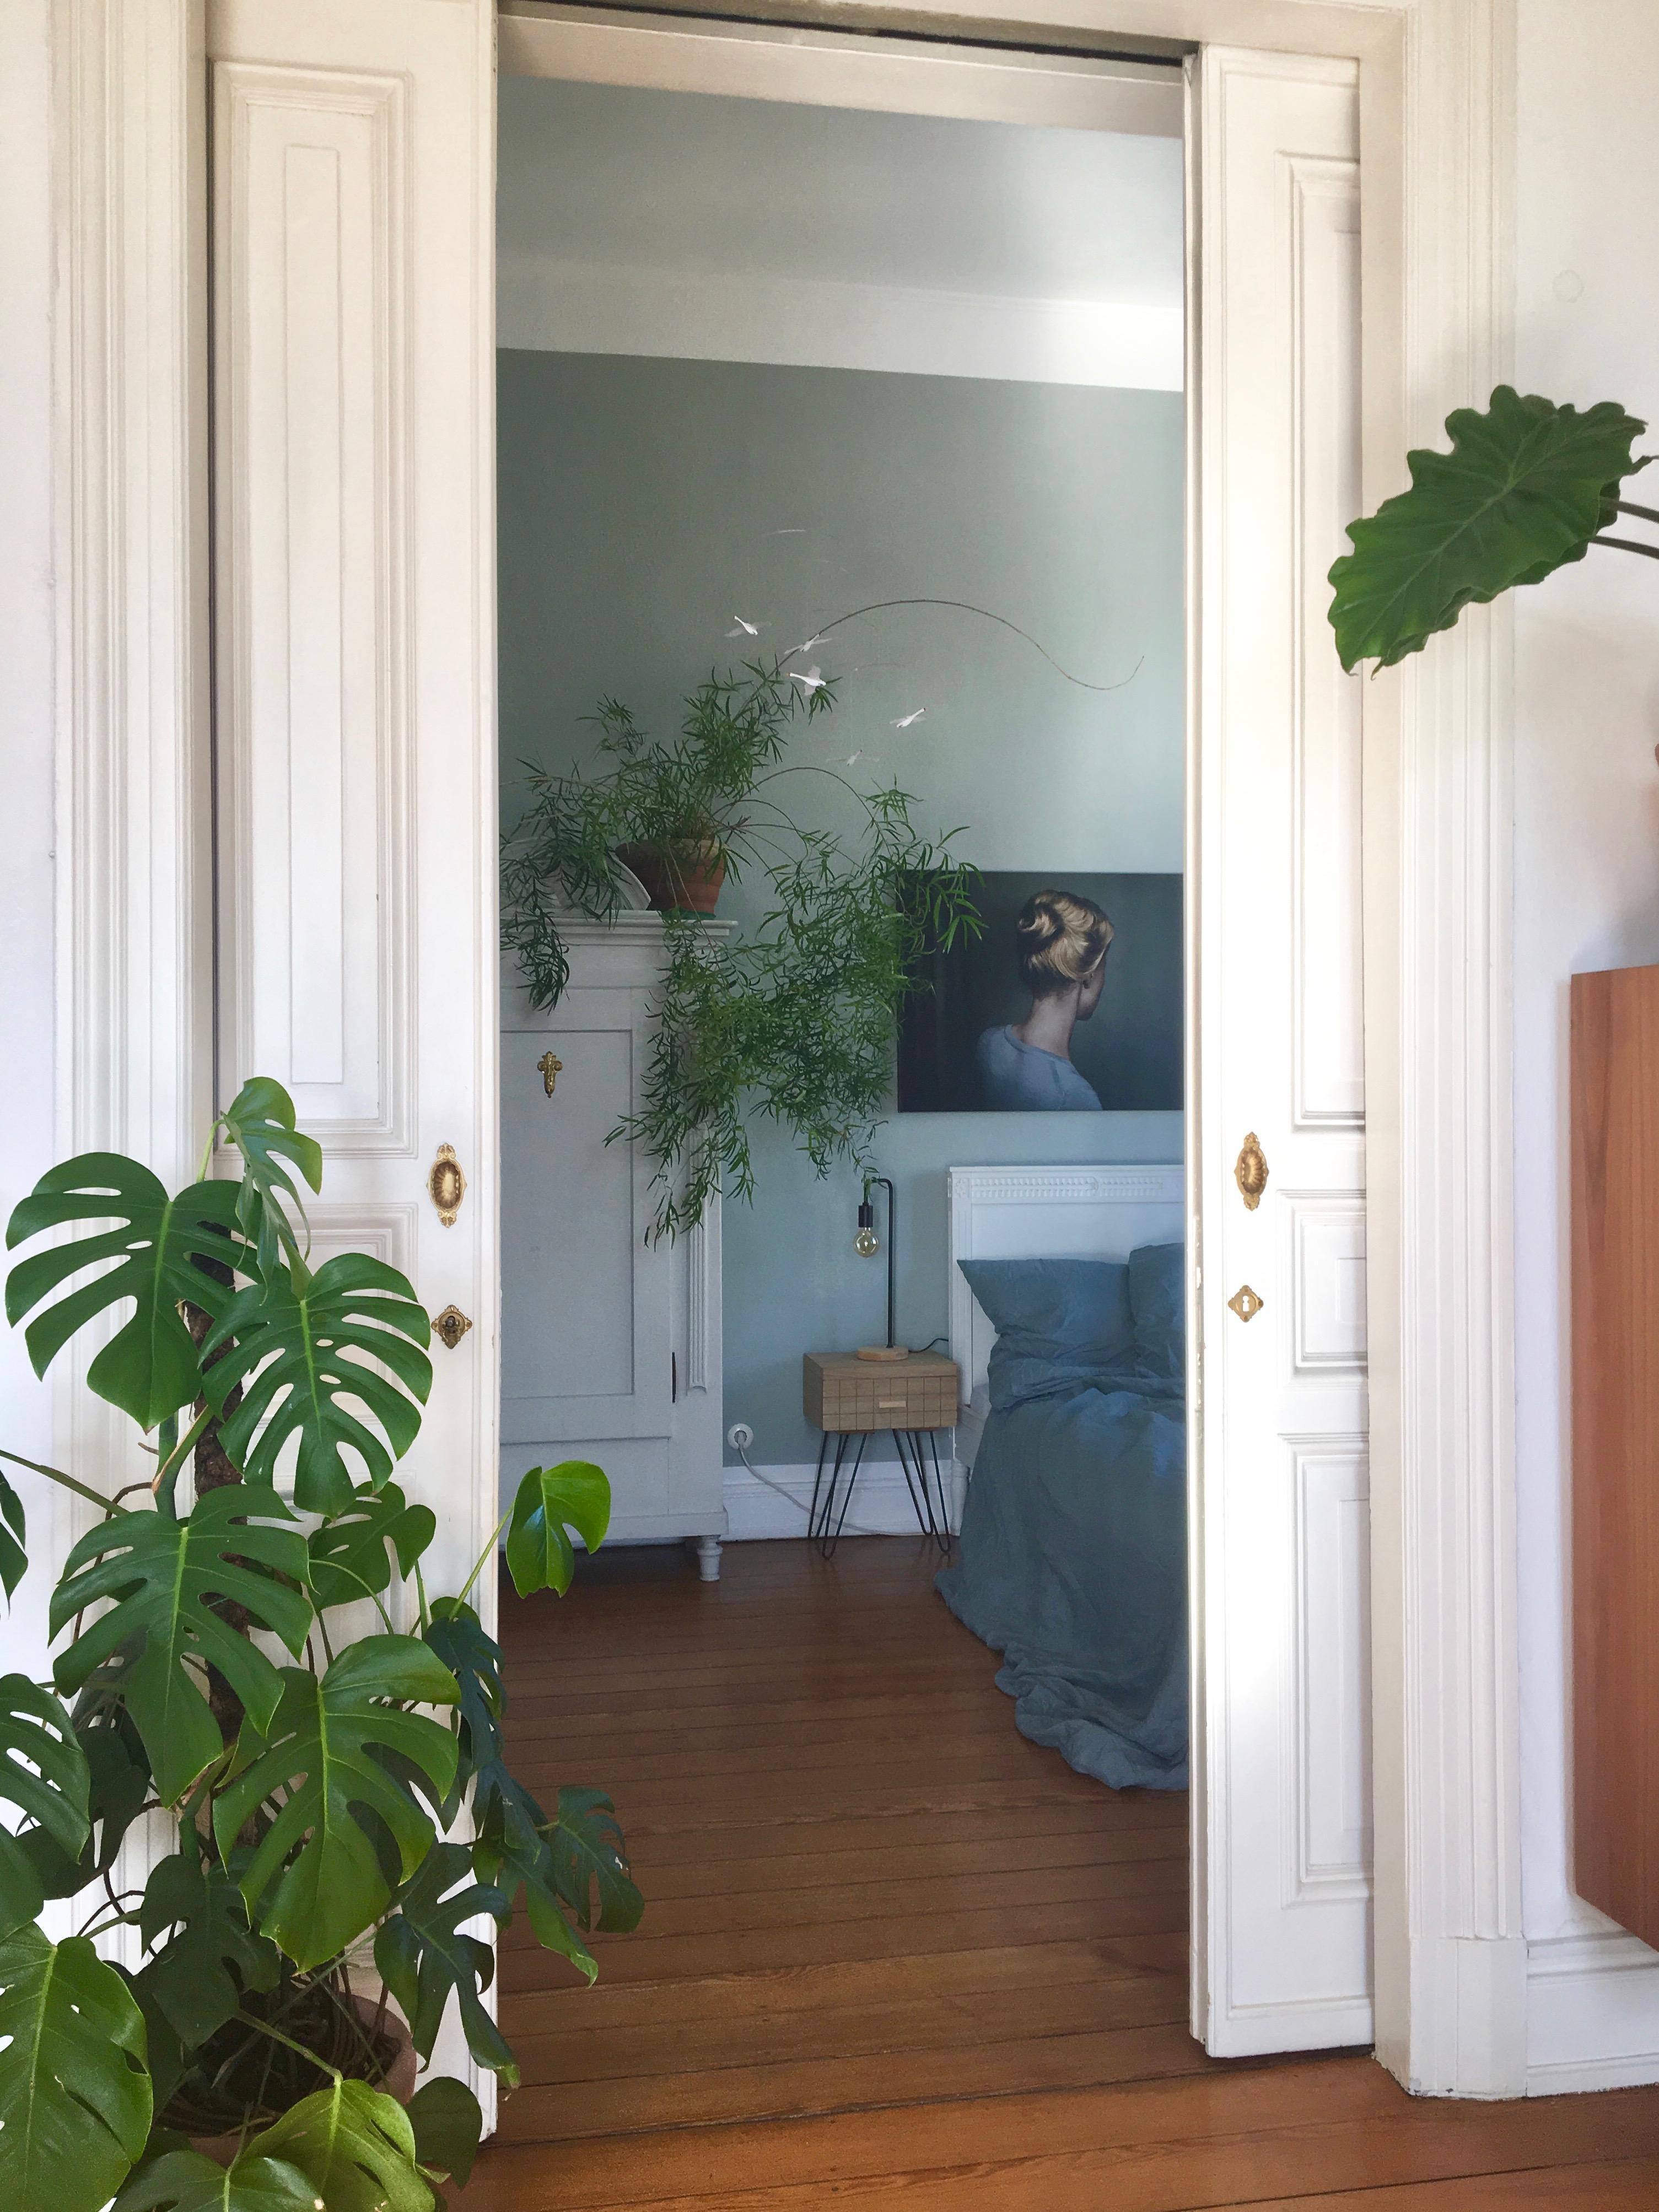 Big Plant Love 🌿🌱💚 
#bedroom #monstera #asparagus #billyandhells #alpinafeinefarben #midcentury